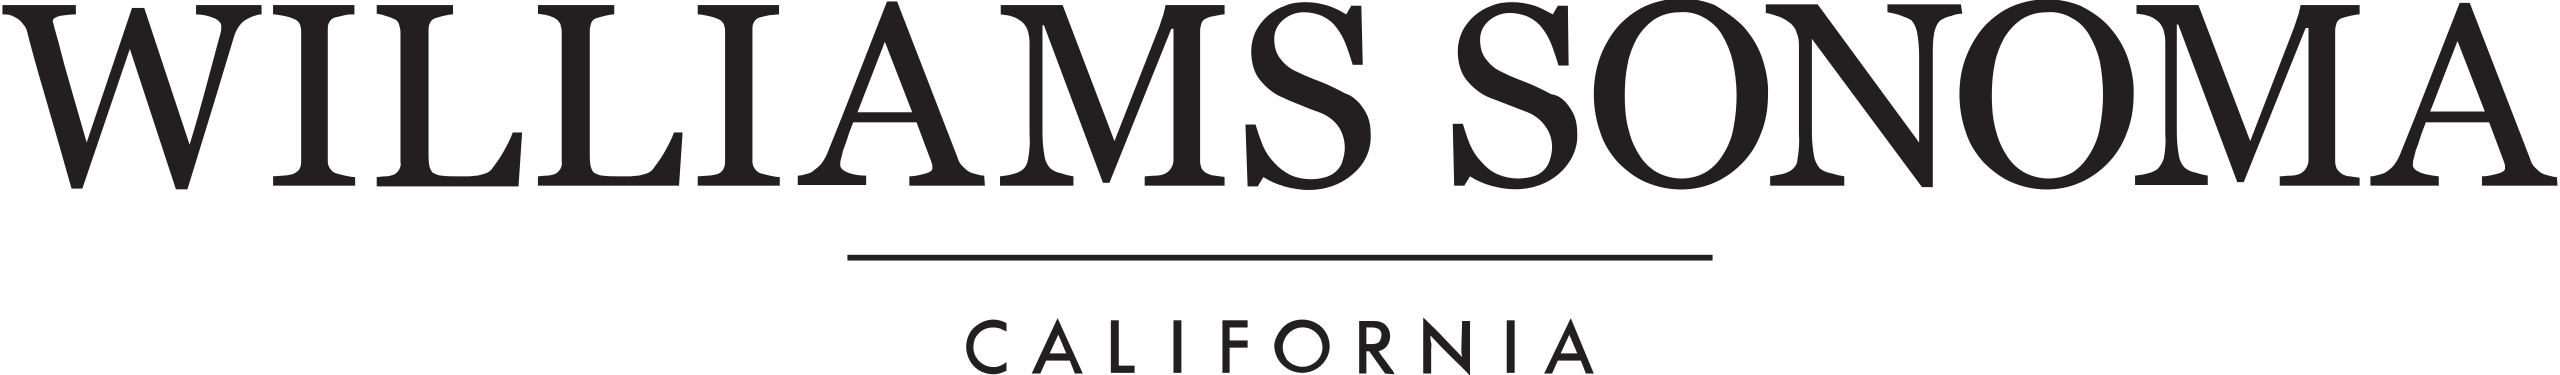 Williams_Sonoma_logo.svg